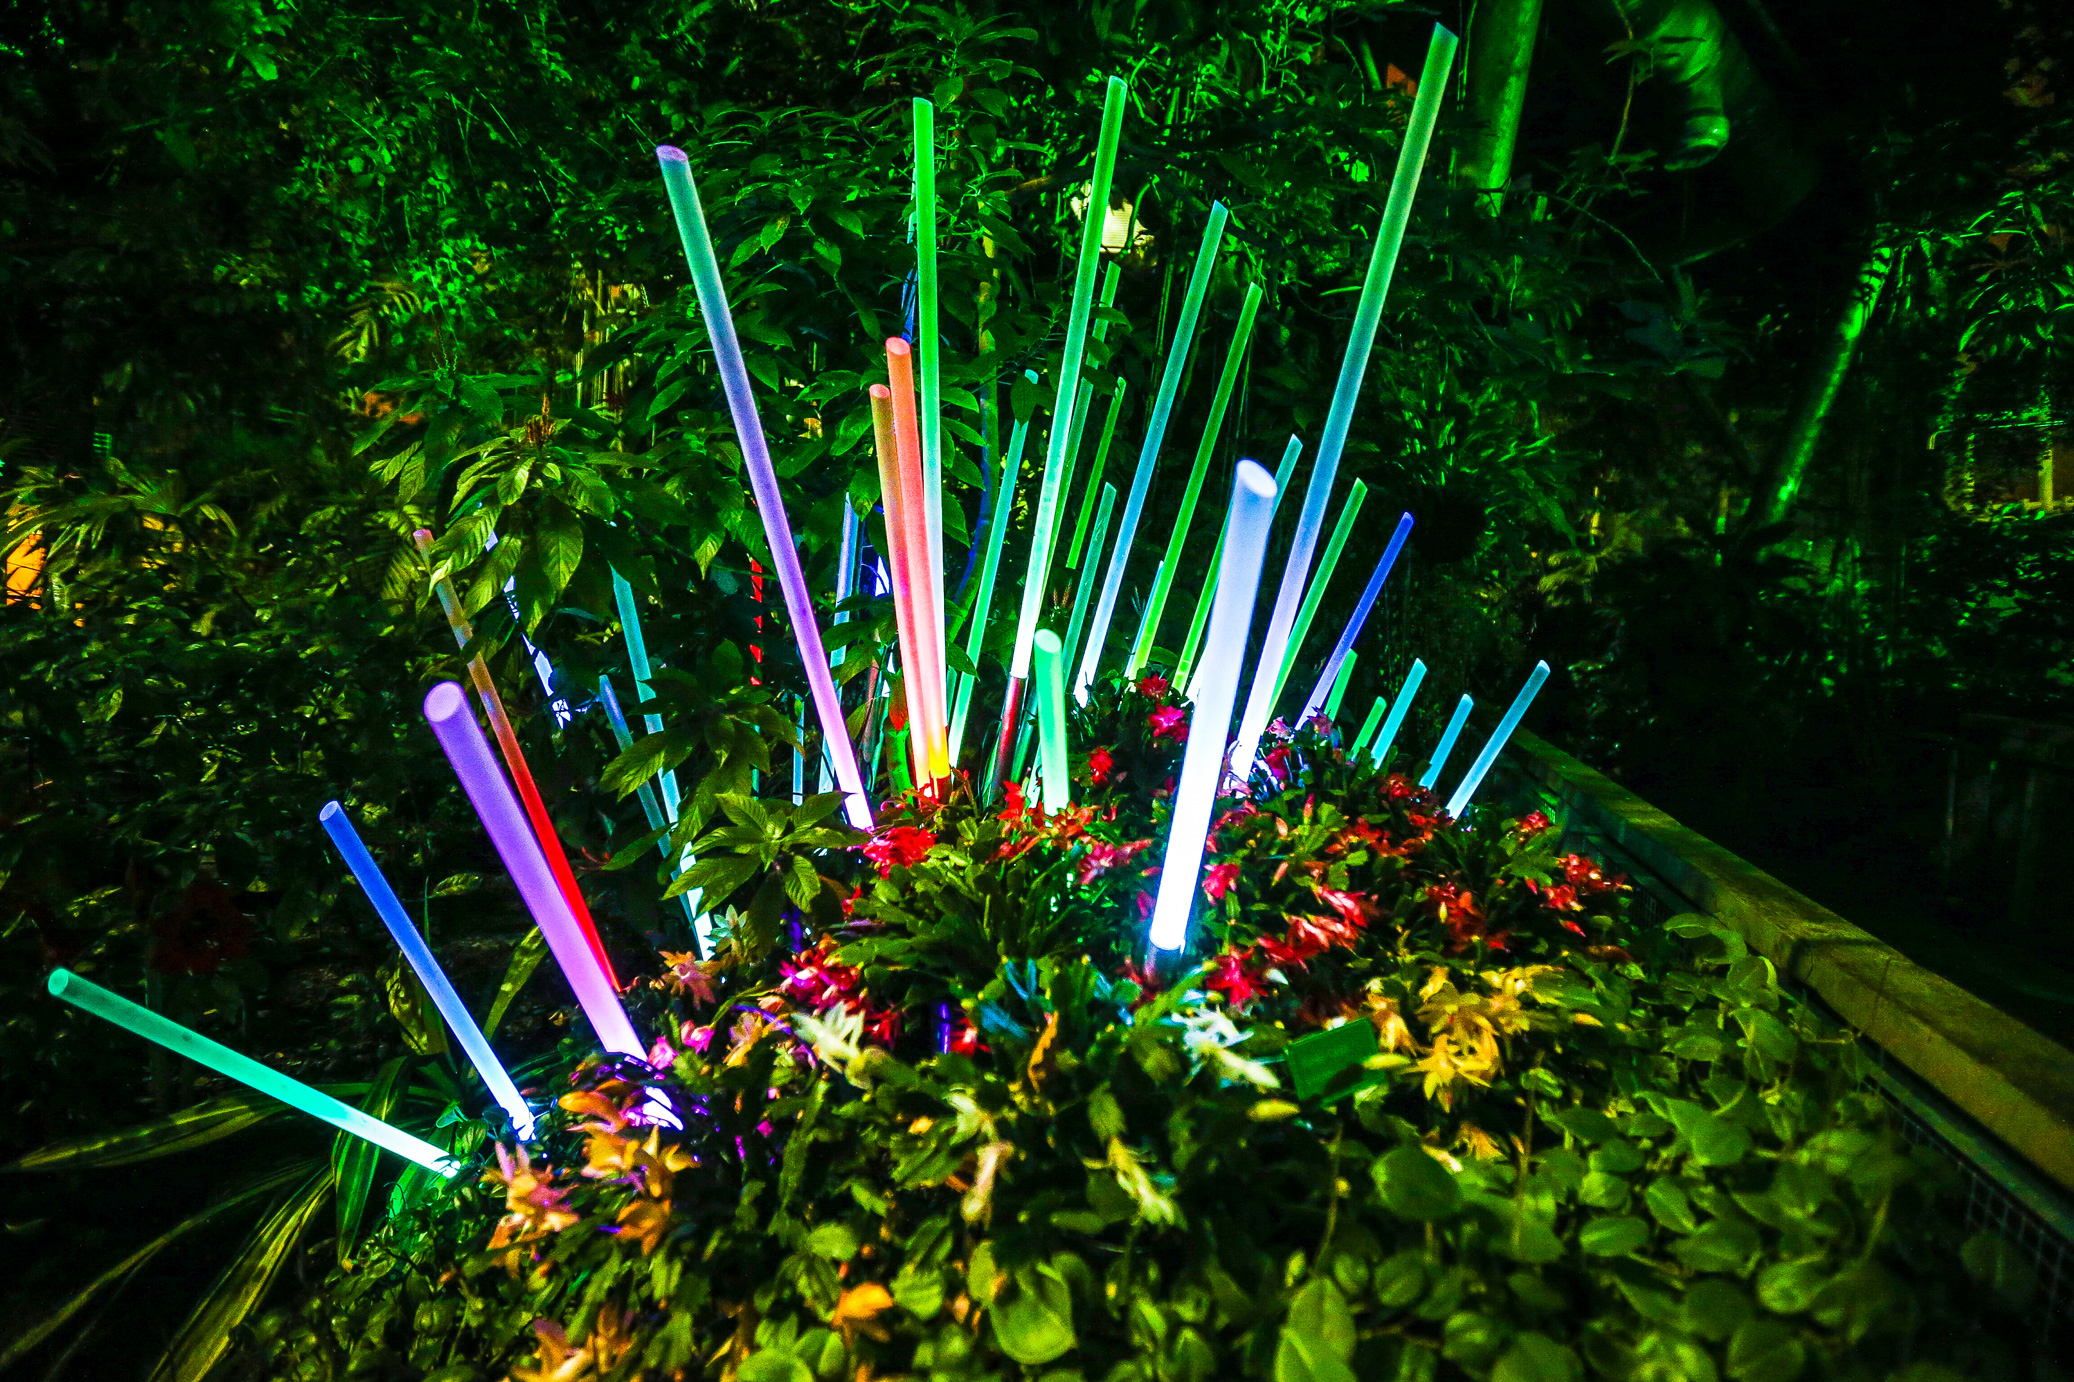 Glow Cleveland Botanical Garden S Jay Kossman Photography